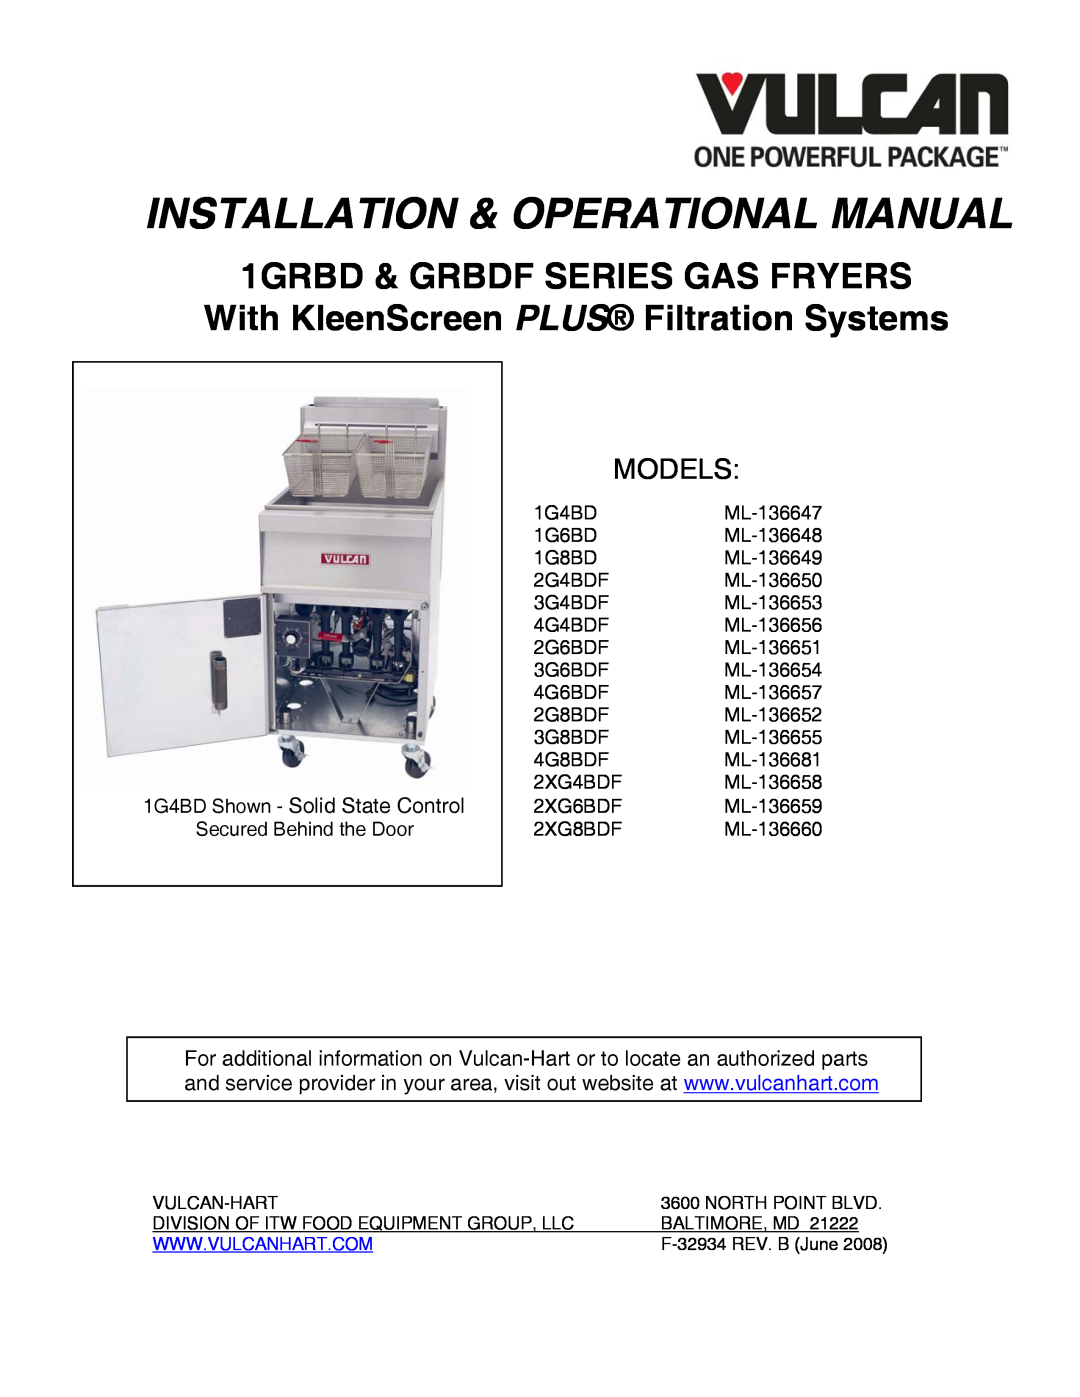 Vulcan-Hart ML-136656, ML-136654, ML-136657, ML-136681, ML-136651, ML-136652 manual Installation & Operational Manual, Models 